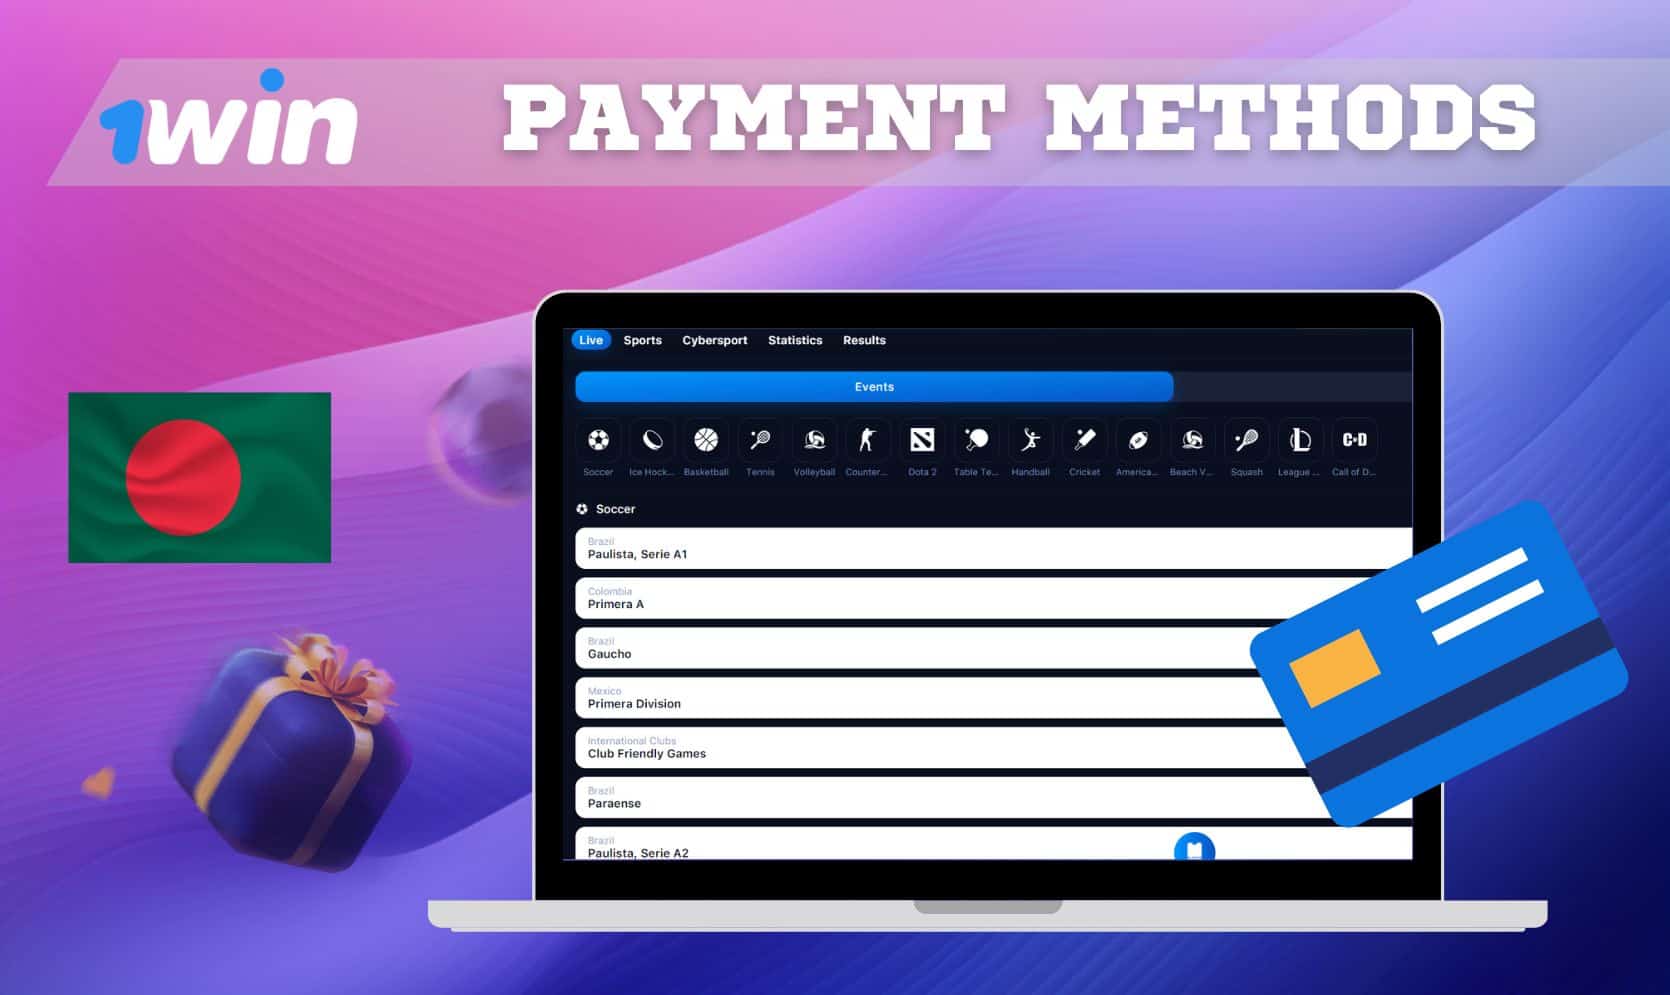 1Win Bangladesh Payment Methods overview